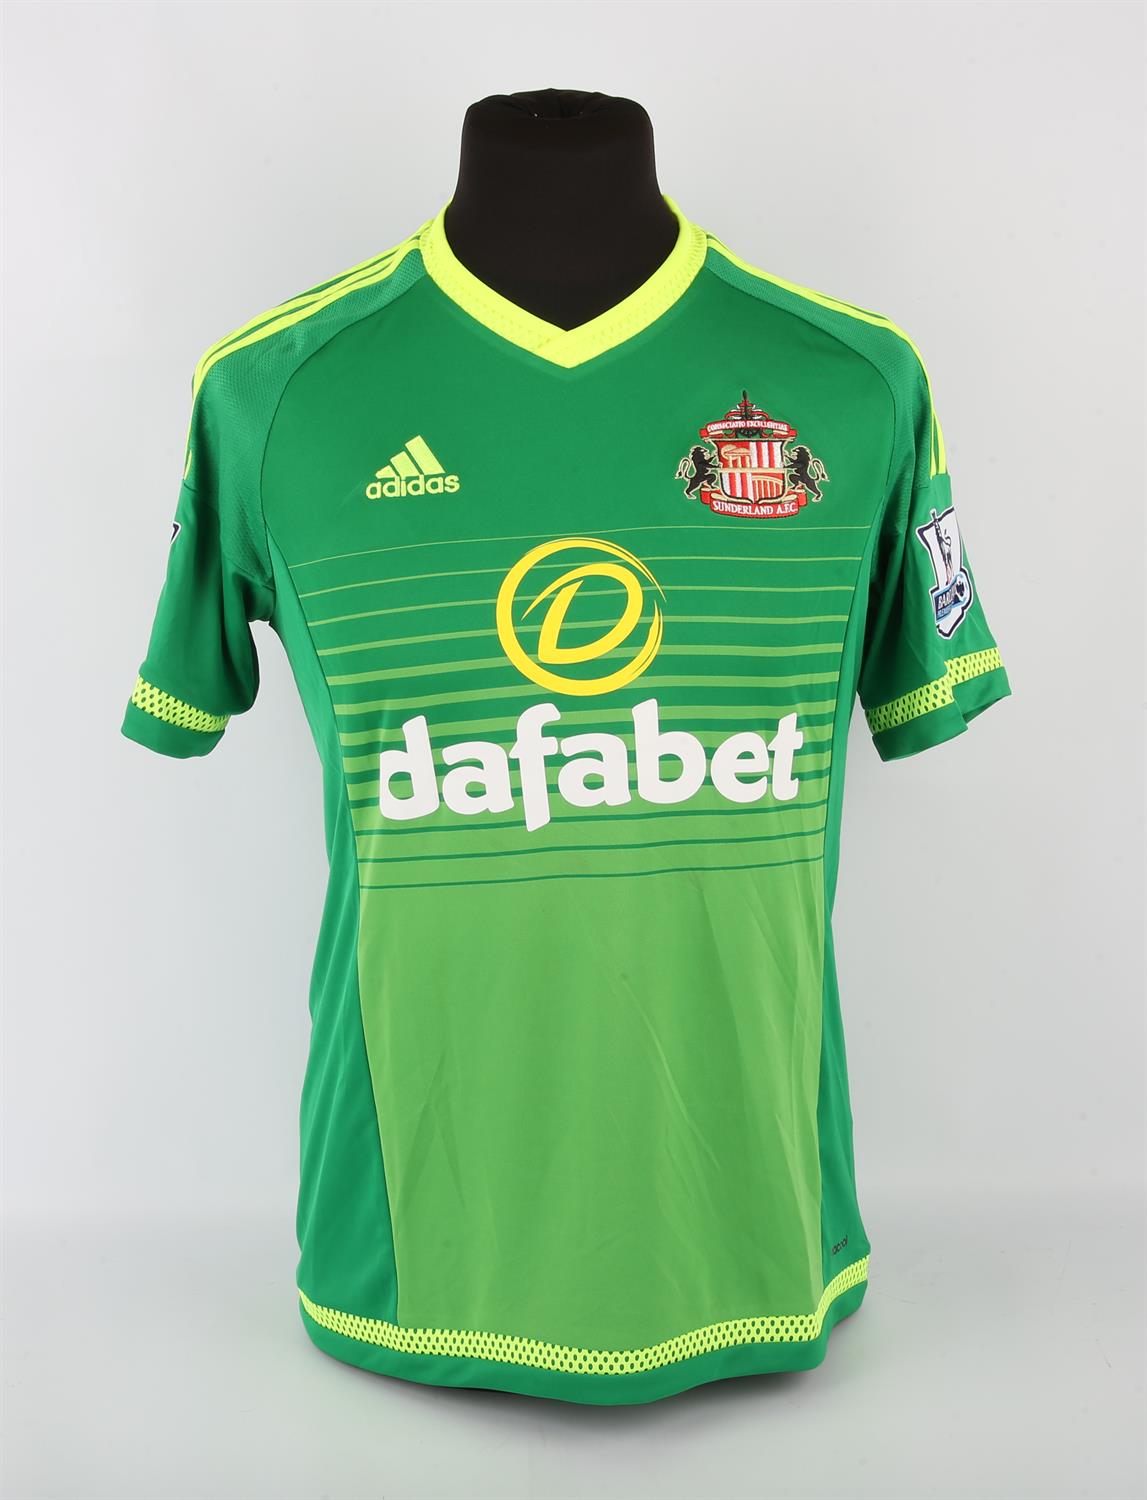 Sunderland A.F.C. Football club, Jeremain Lens (No.17) 2015-2016 Season shirt, S/S. - Image 2 of 2